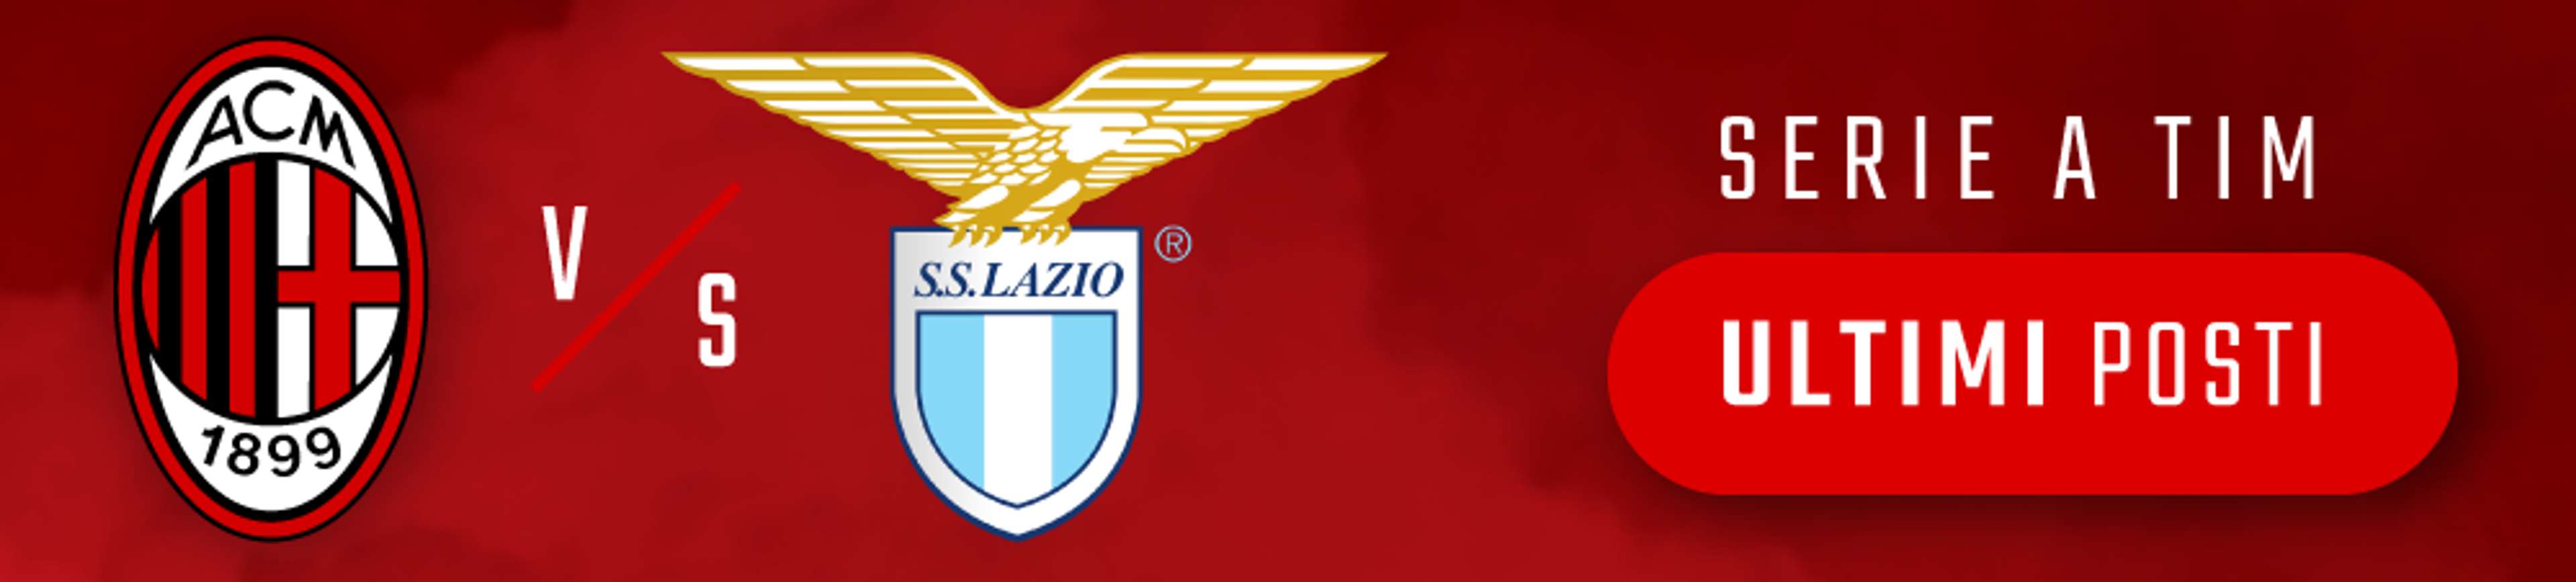 Banner Milan-Lazio Serie A